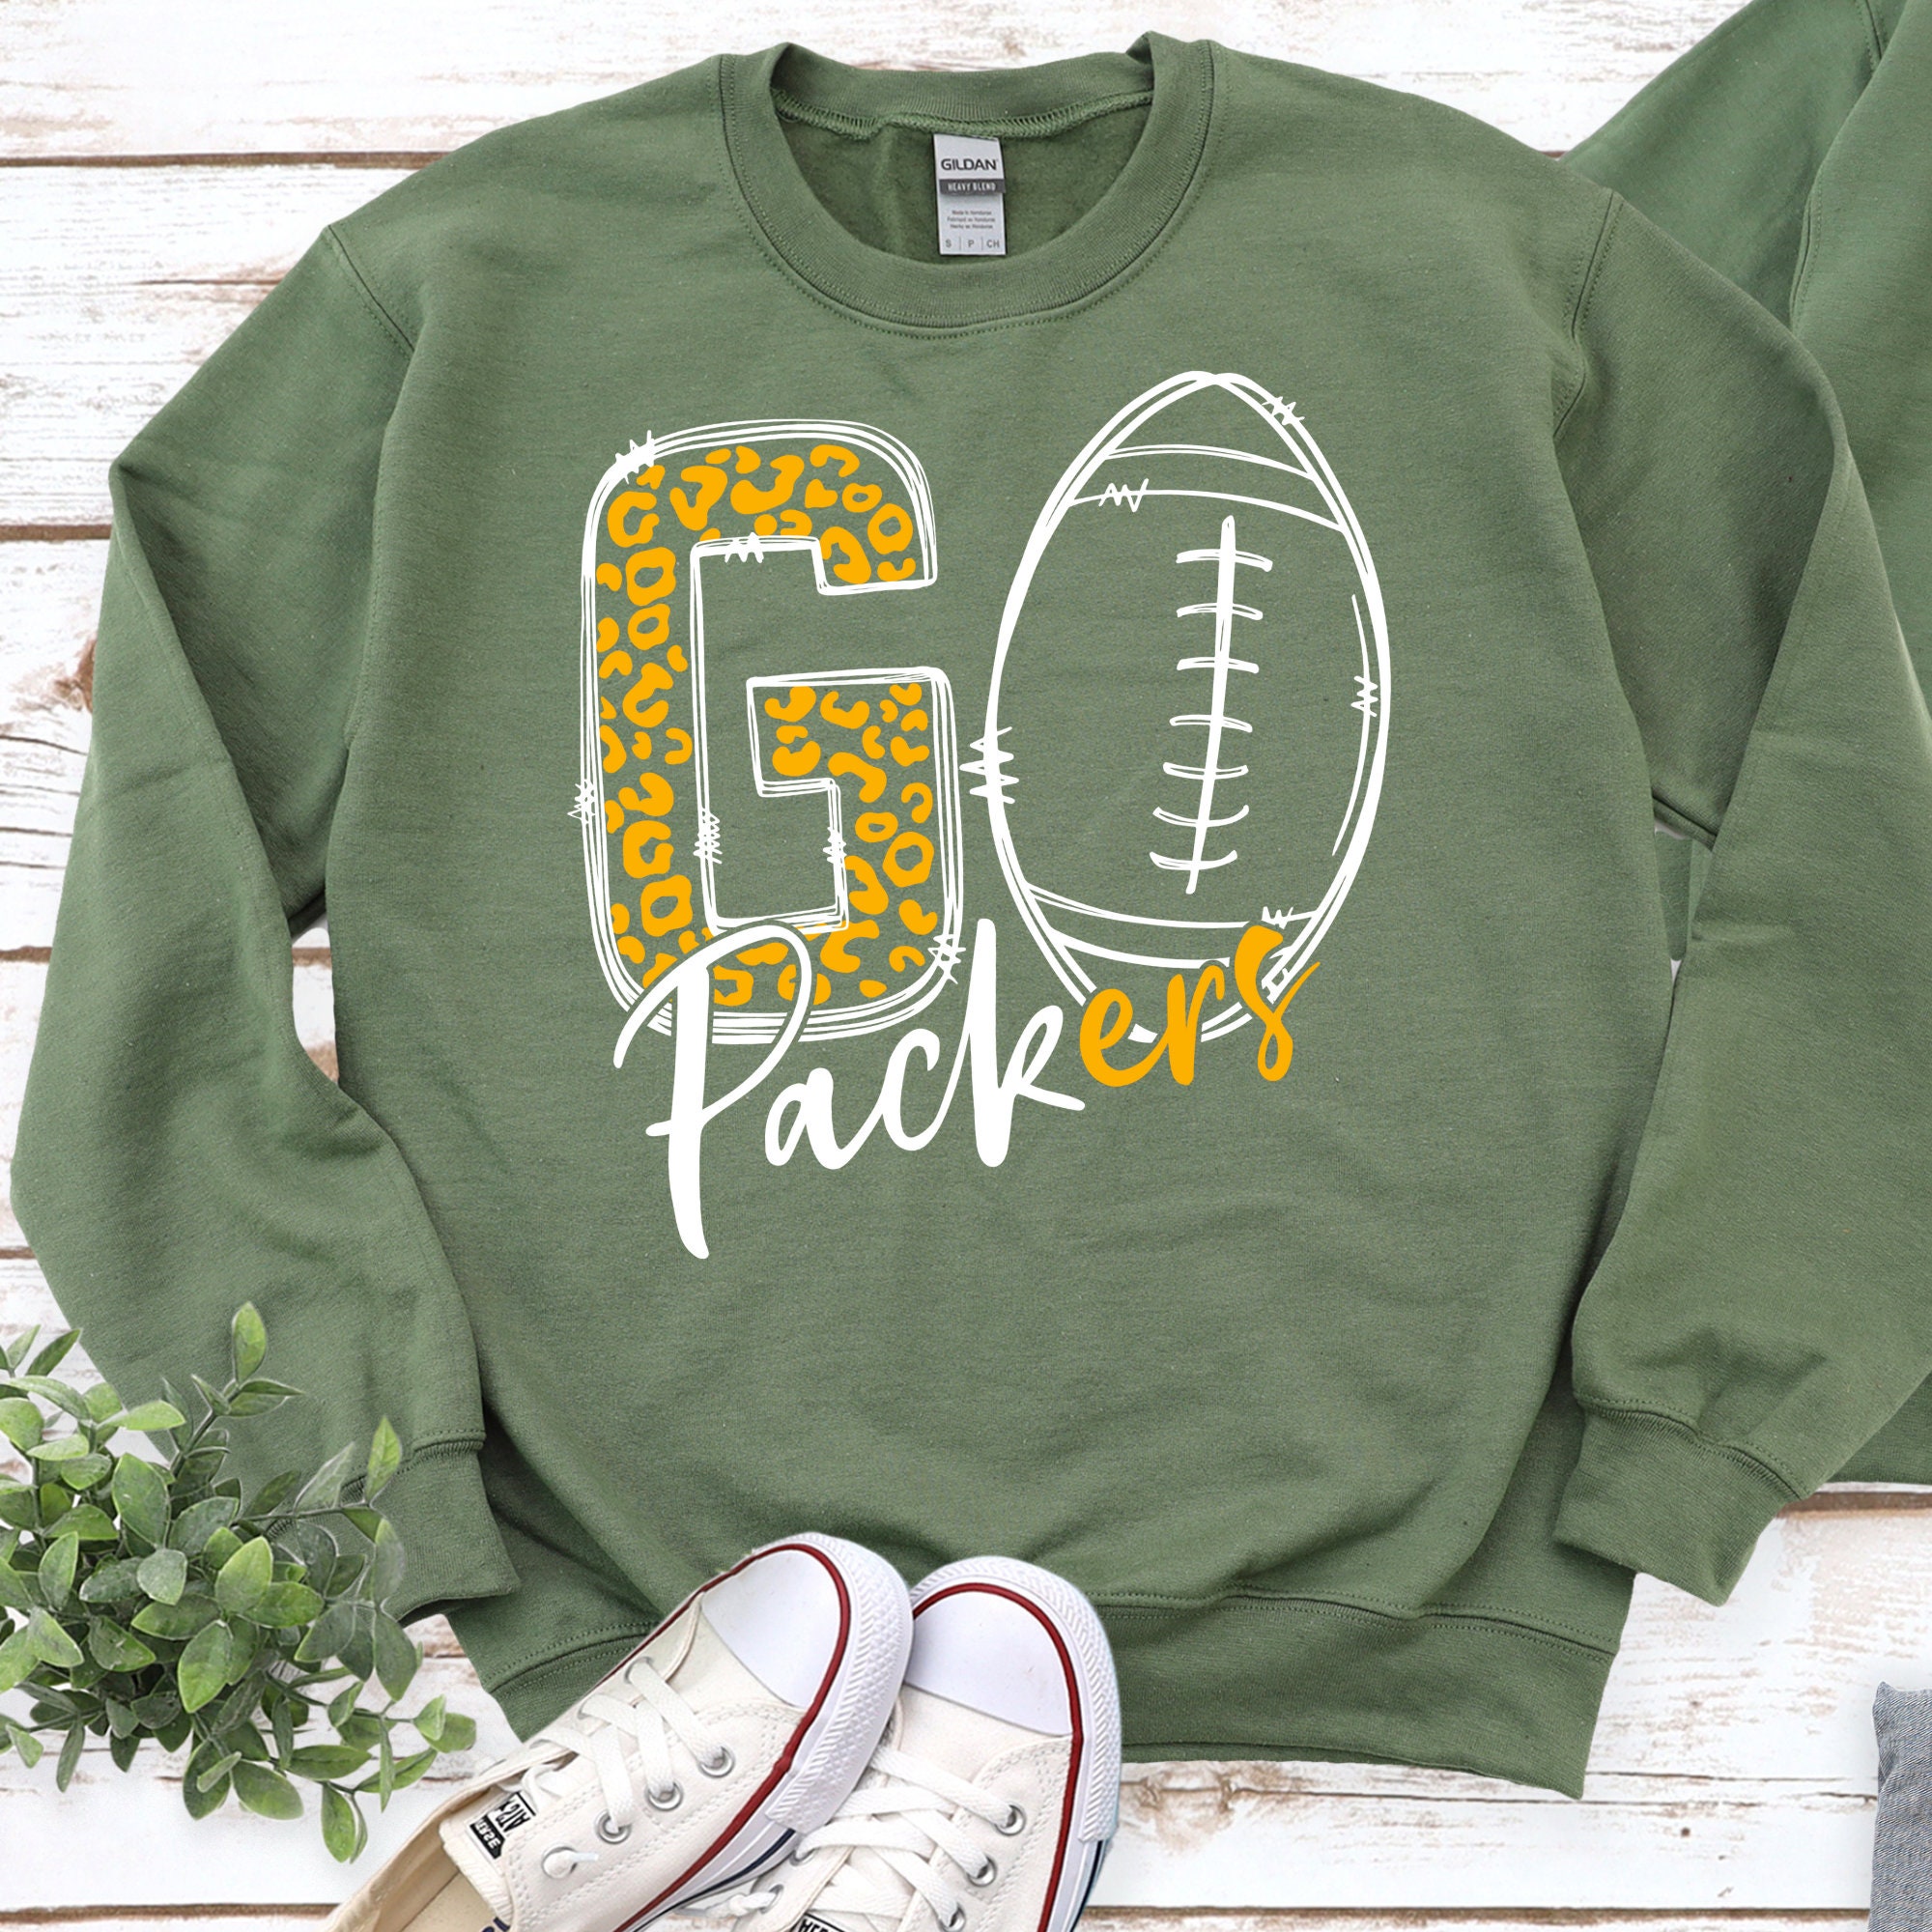 Green Bay Packers Gray Youth Hi-Tech Full Zip Hooded Sweatshirt